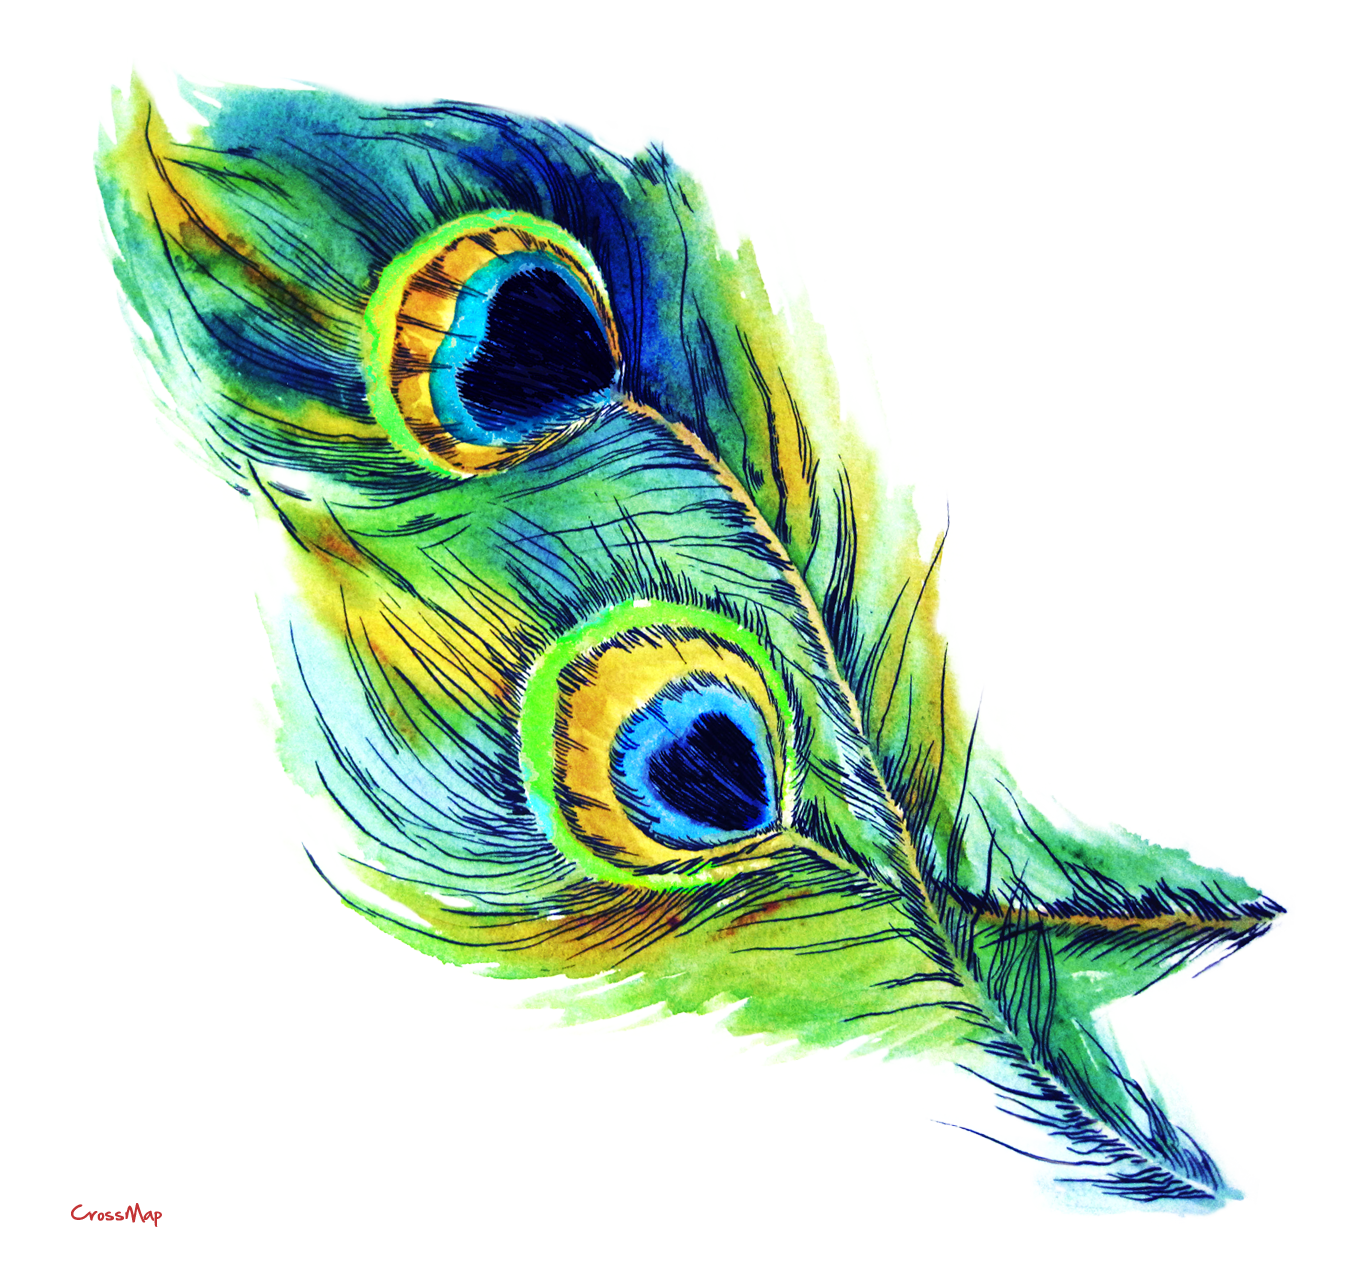 peacock clipart